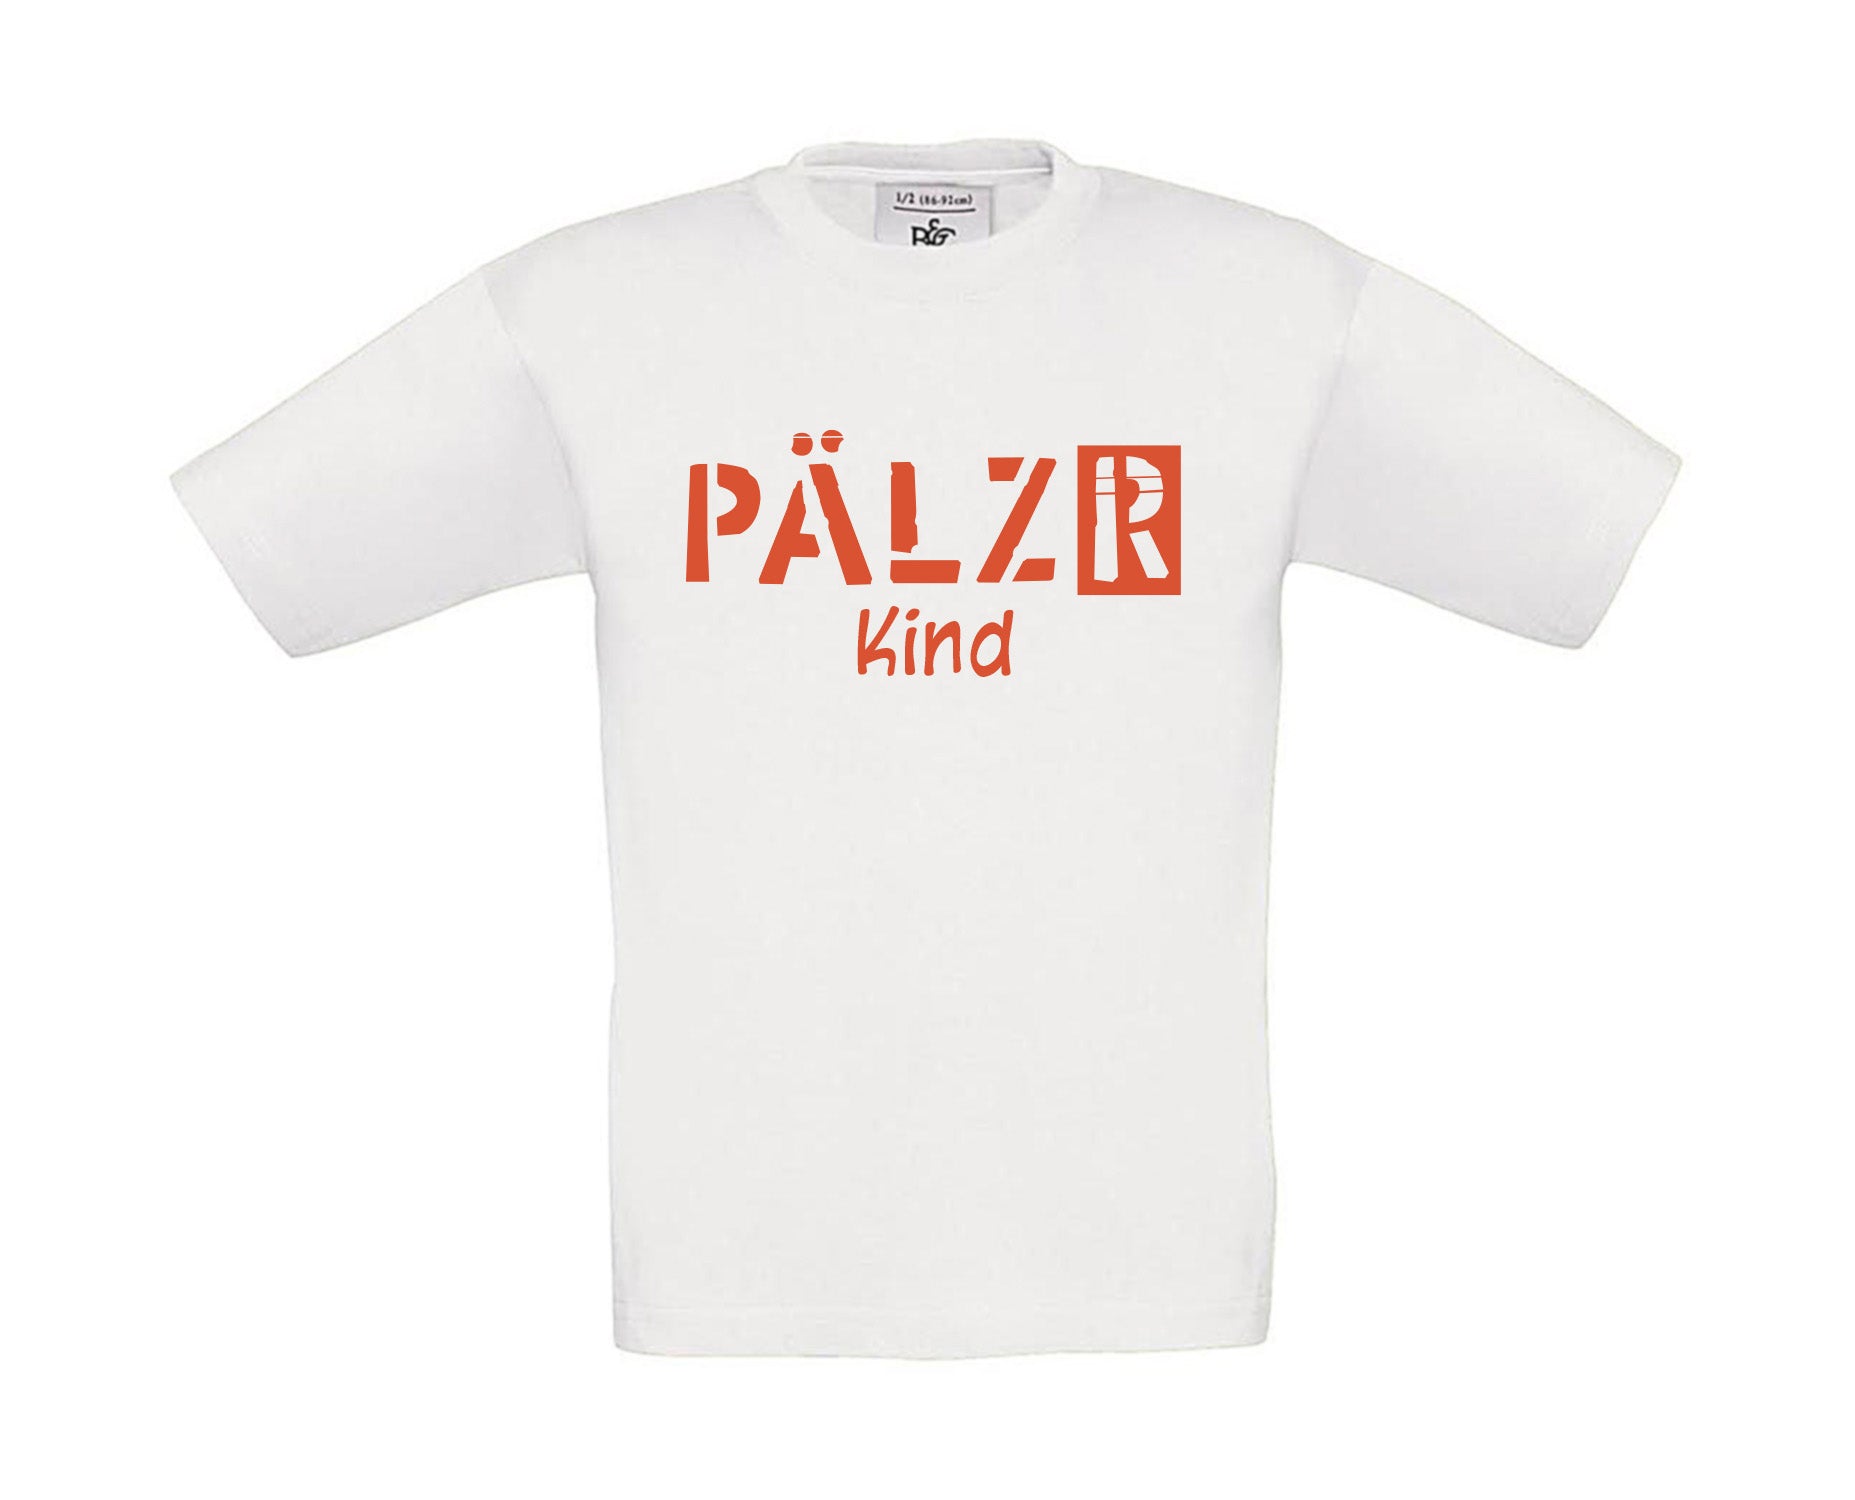 Kinder T-Shirt | PÄLZR Kind | weiss | Logo orange